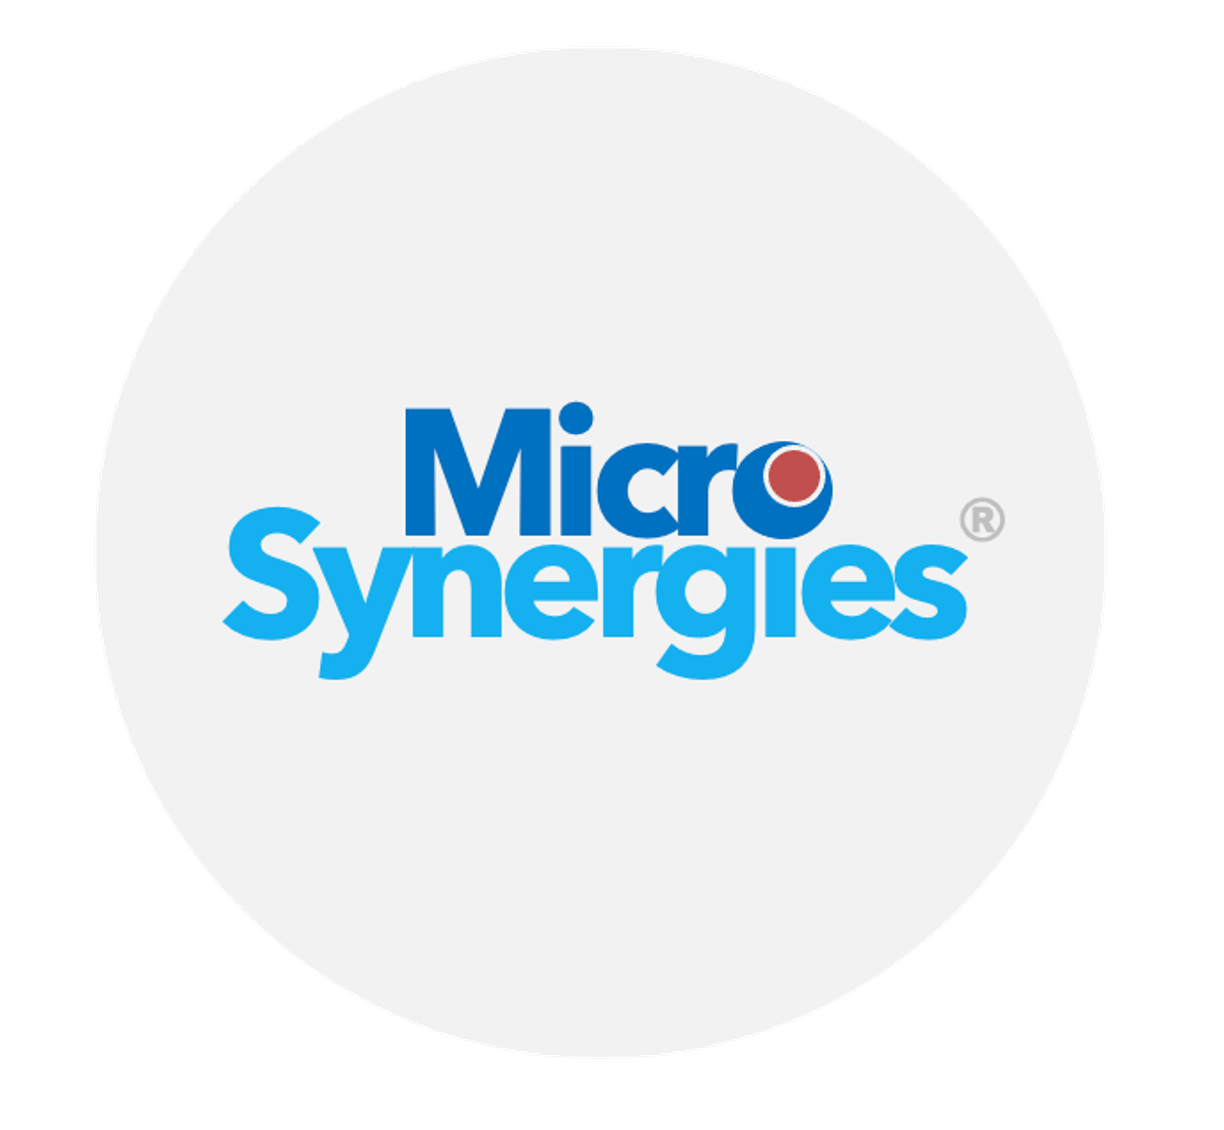 MicroSynergies